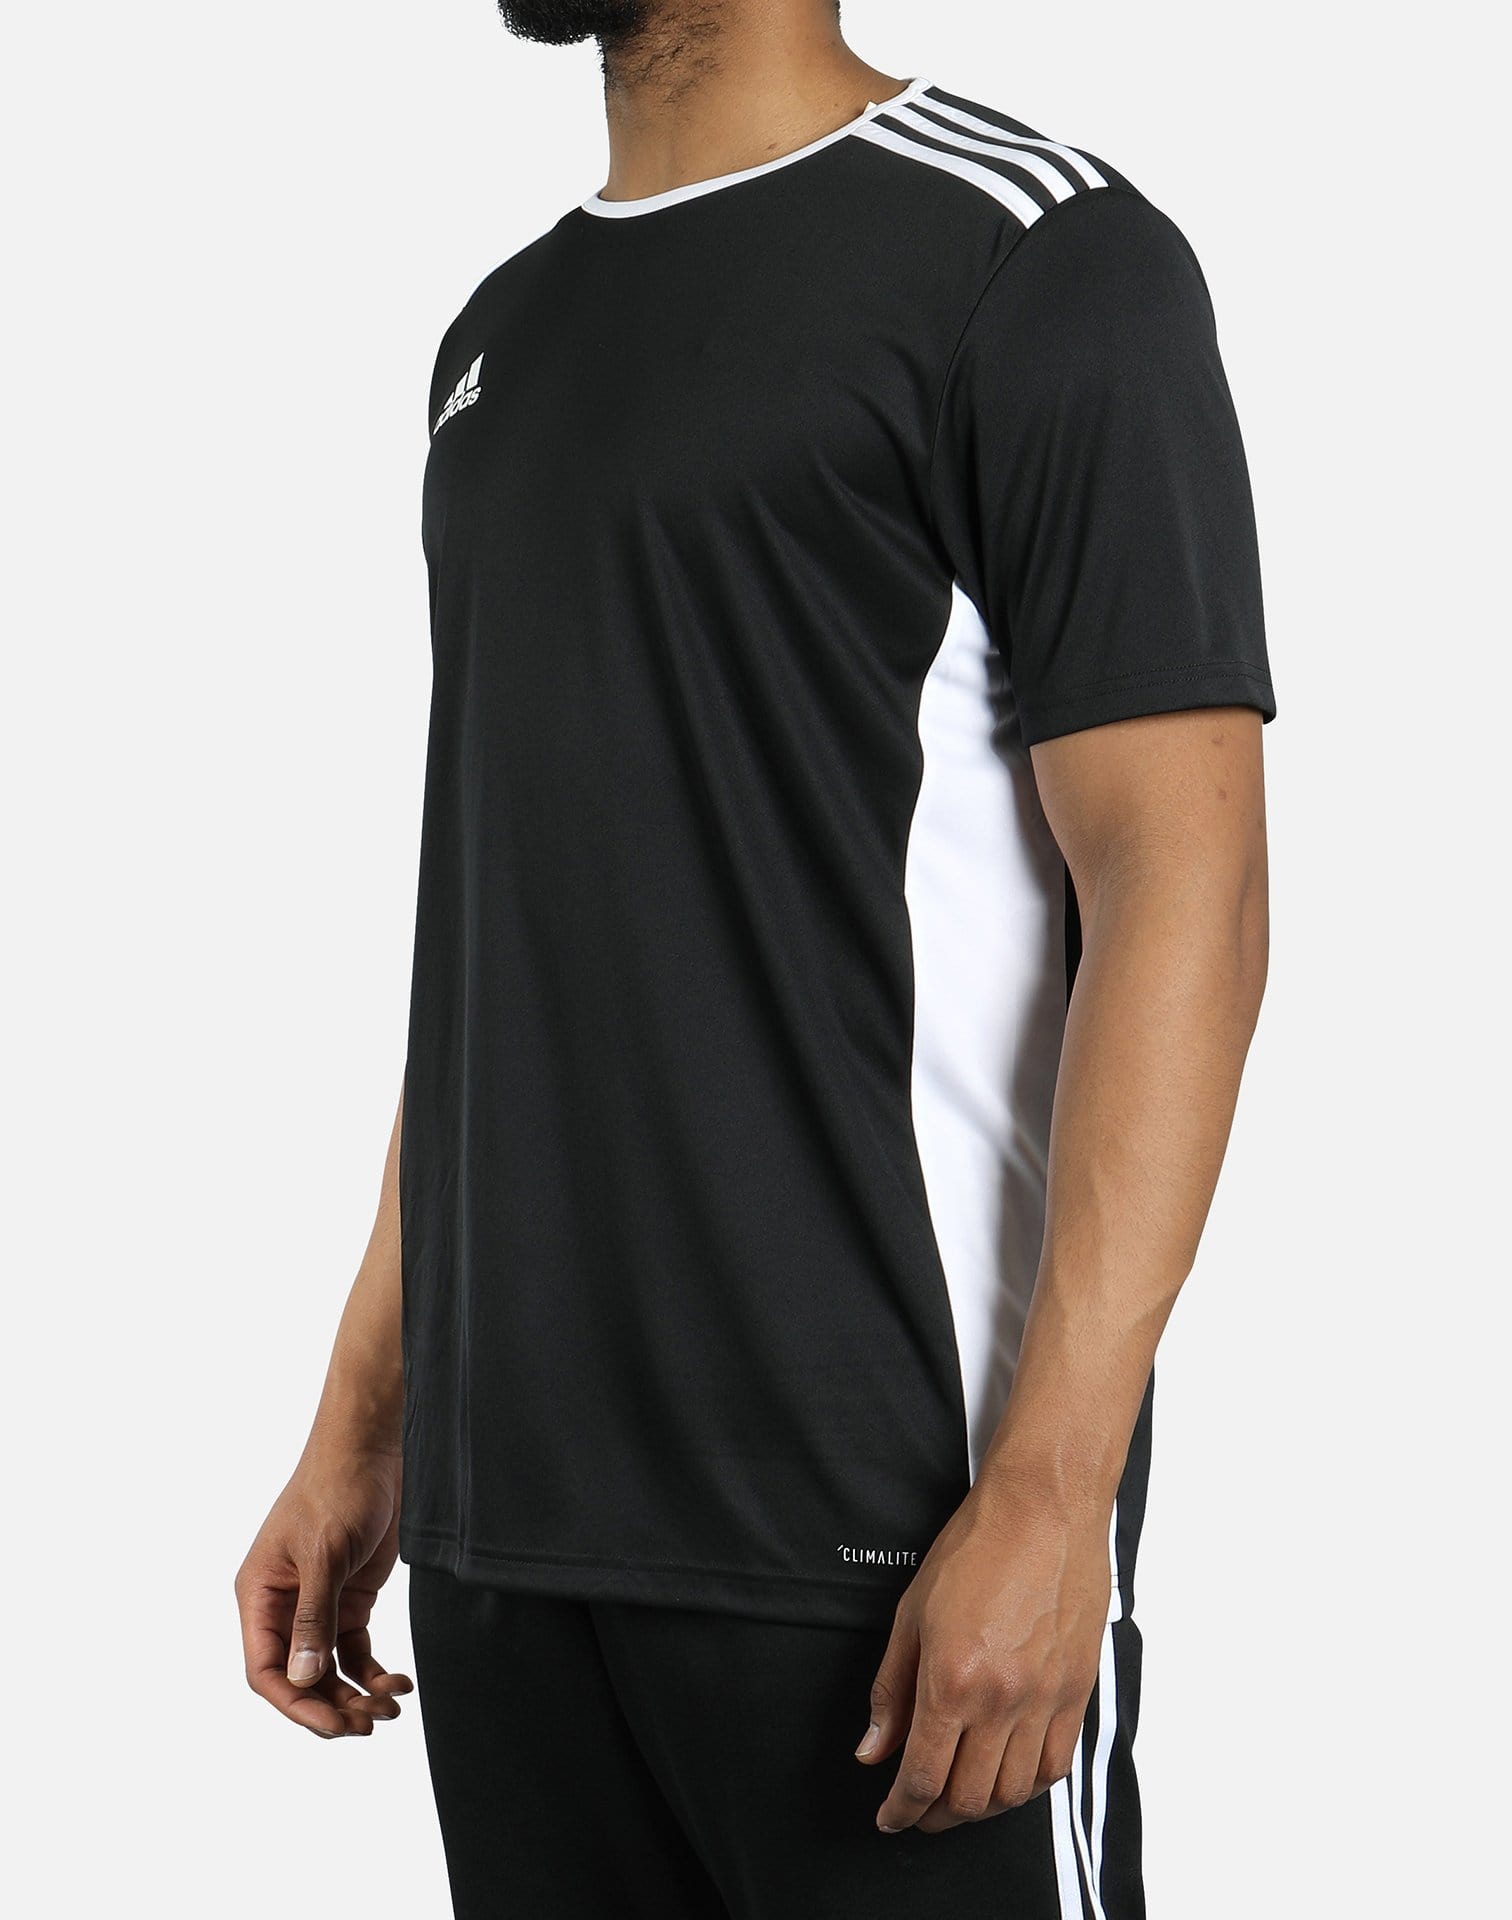 Adidas Men's Entrada 18 Jersey - Black/White